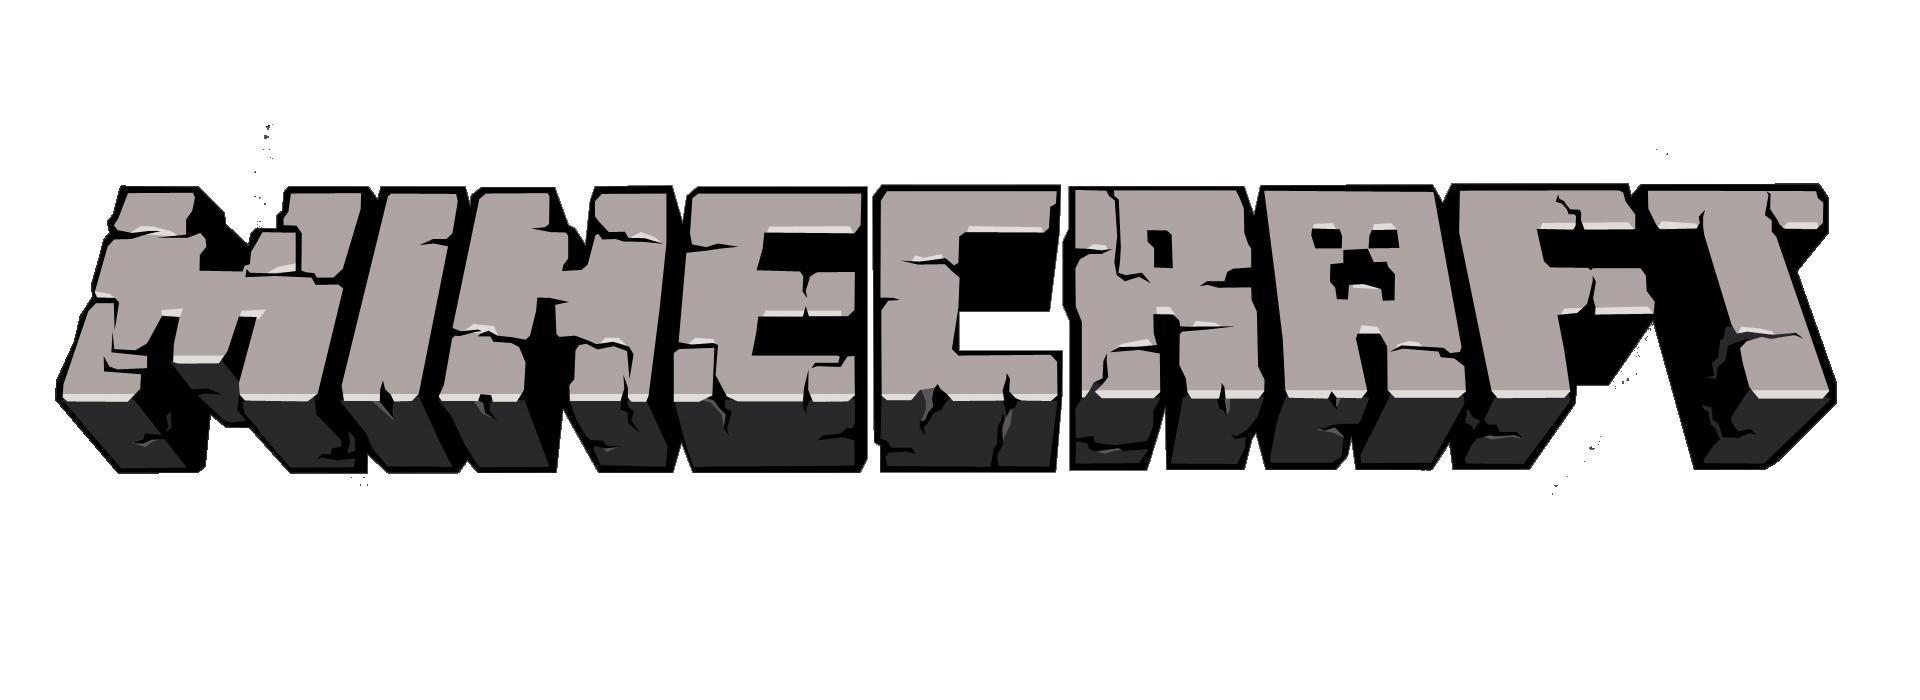 Download Minecraft Logo Png HQ PNG Image | FreePNGImg